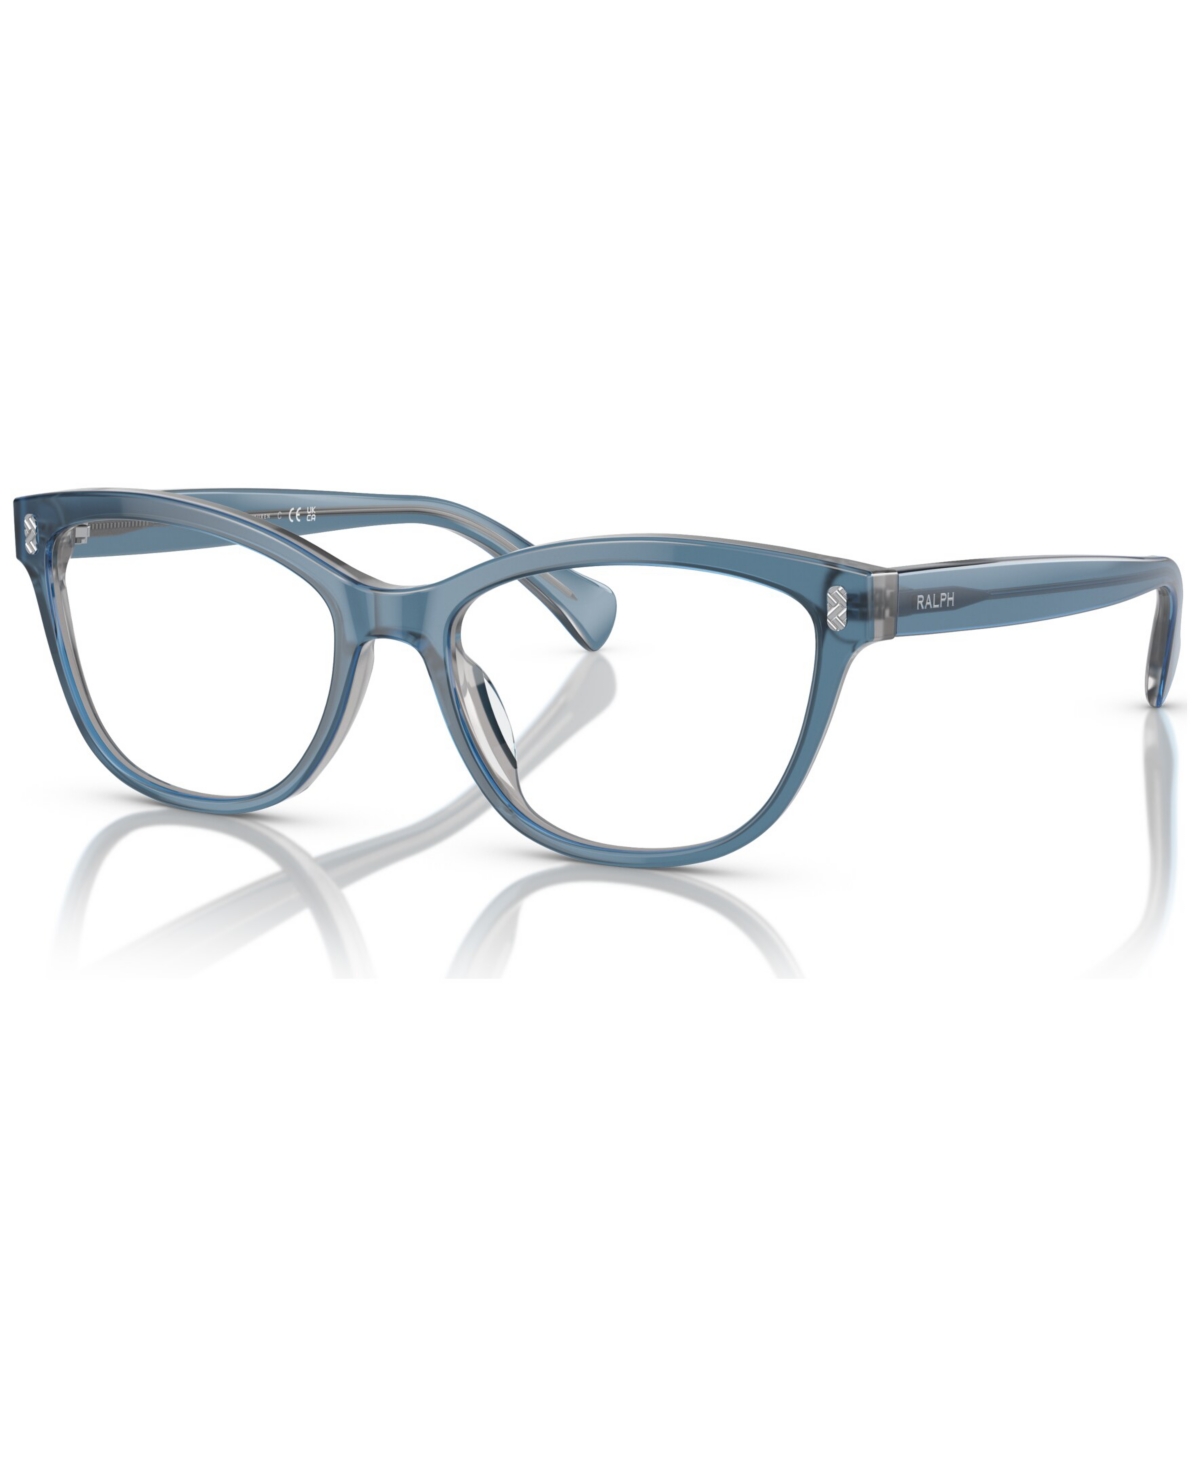 Women's Oval Eyeglasses, RA7152U 52 - Transparent Blue On Light Gray